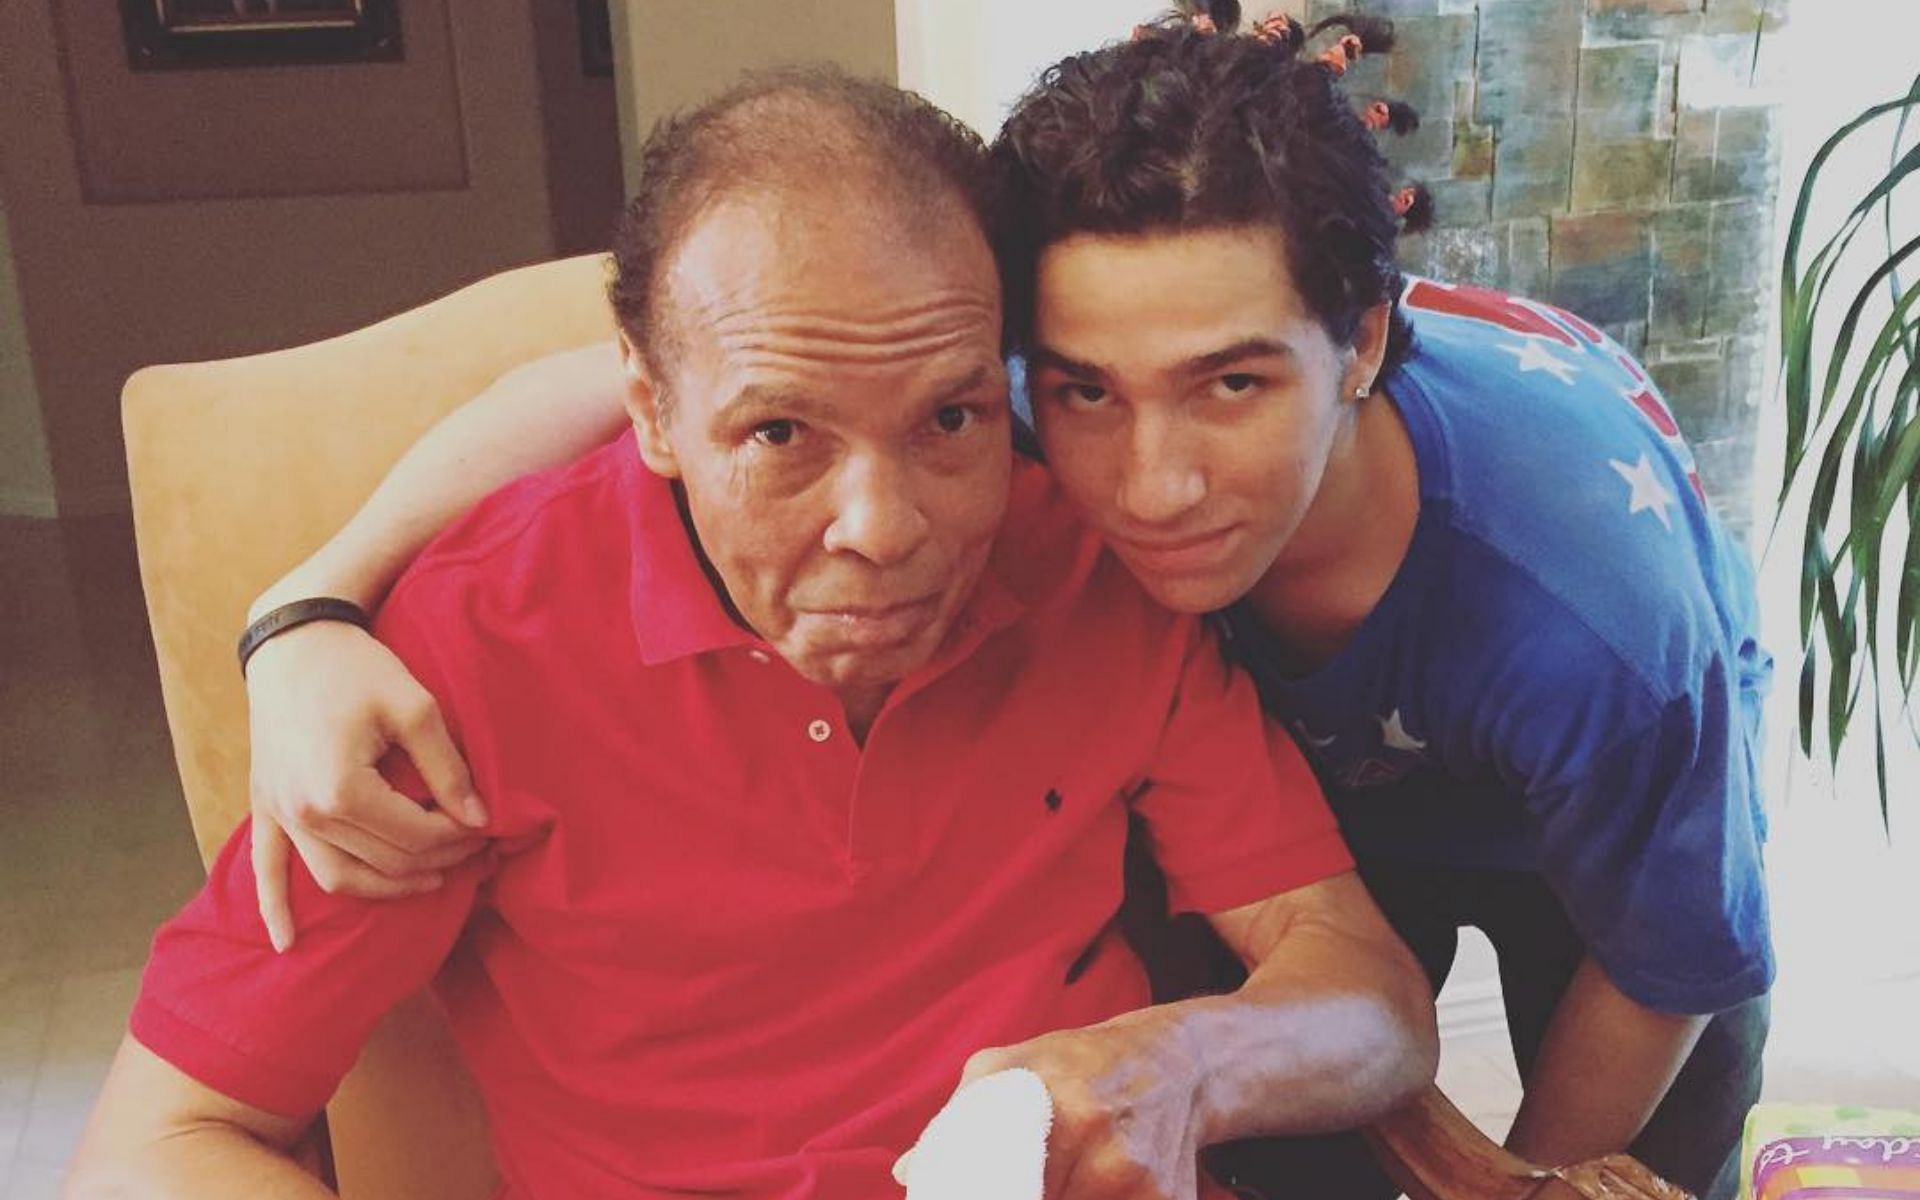 Muhammad Ali (left) &amp; Nico Ali Walsh (right) [Image Credits- @nicoaliwalsh on Instagram]